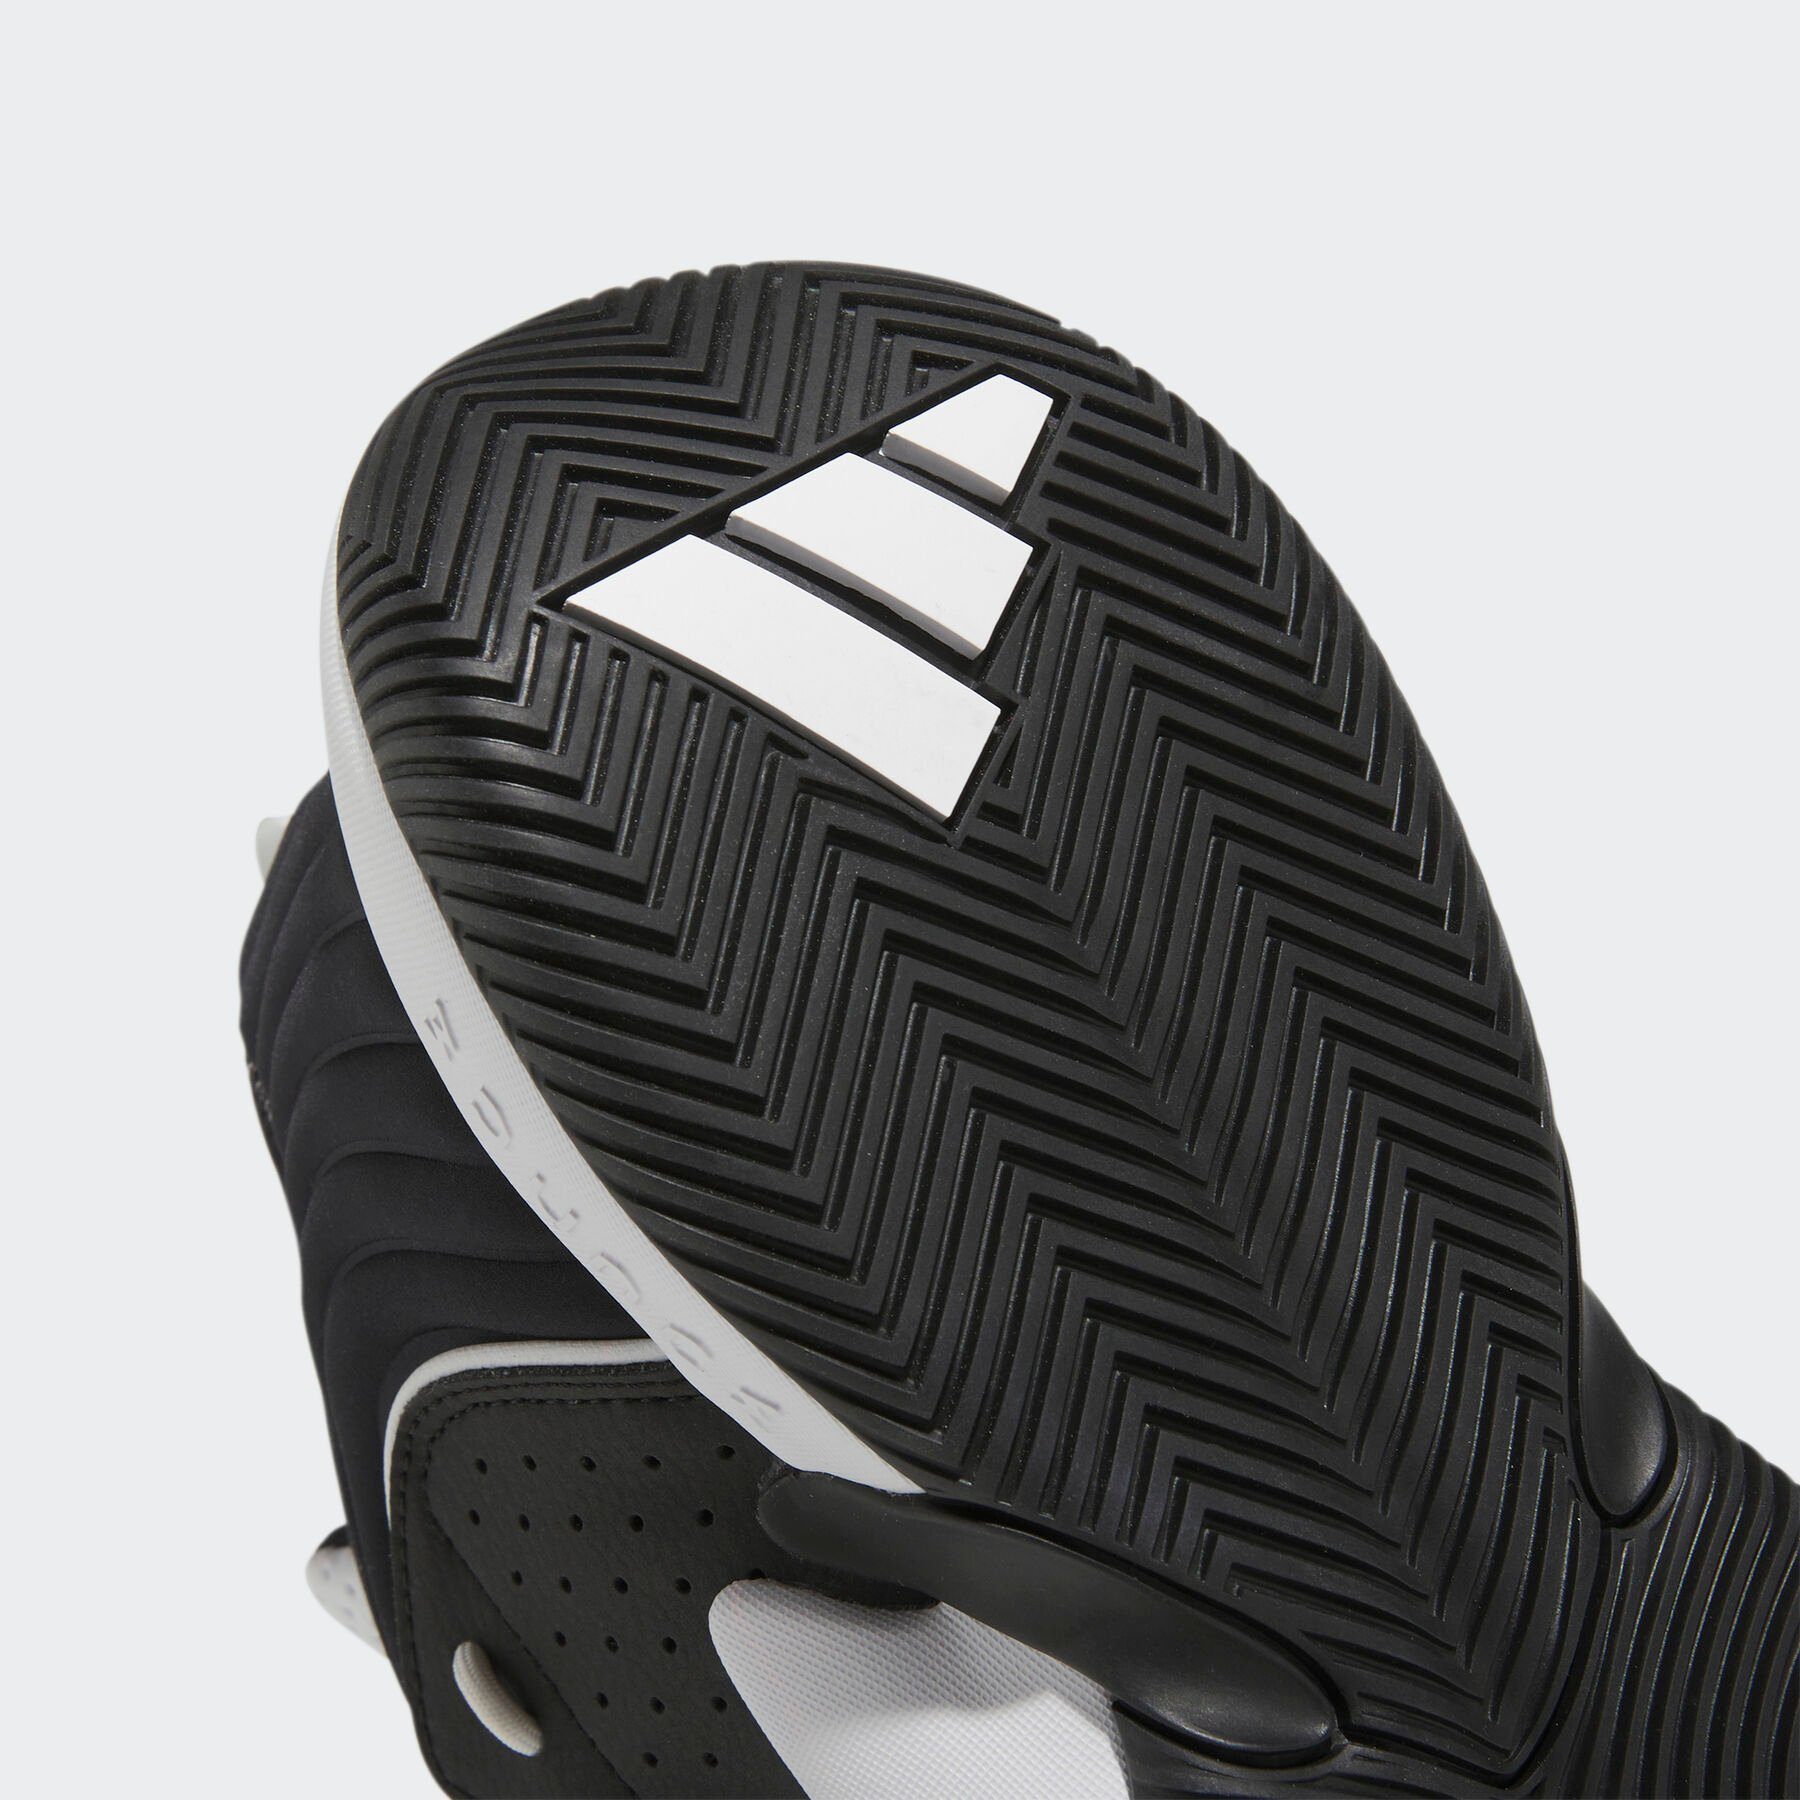 / Black Performance Core UNLIMITED Basketballschuh White Cloud Black Core TRAE adidas /